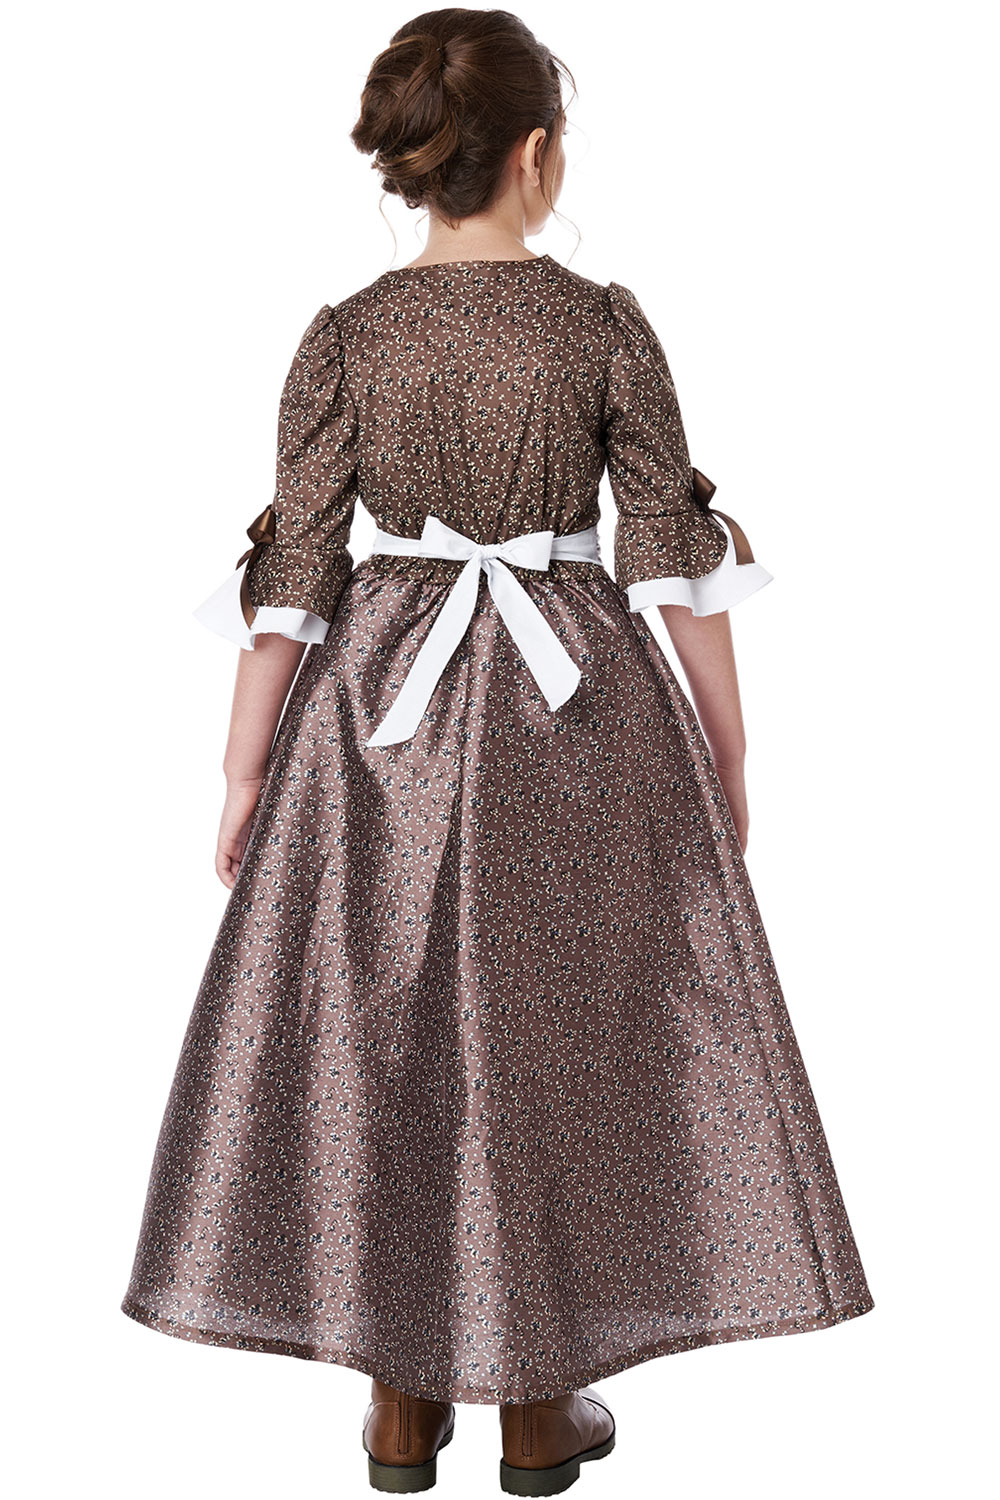 California Costumes Girls Colonial Period DressCostume